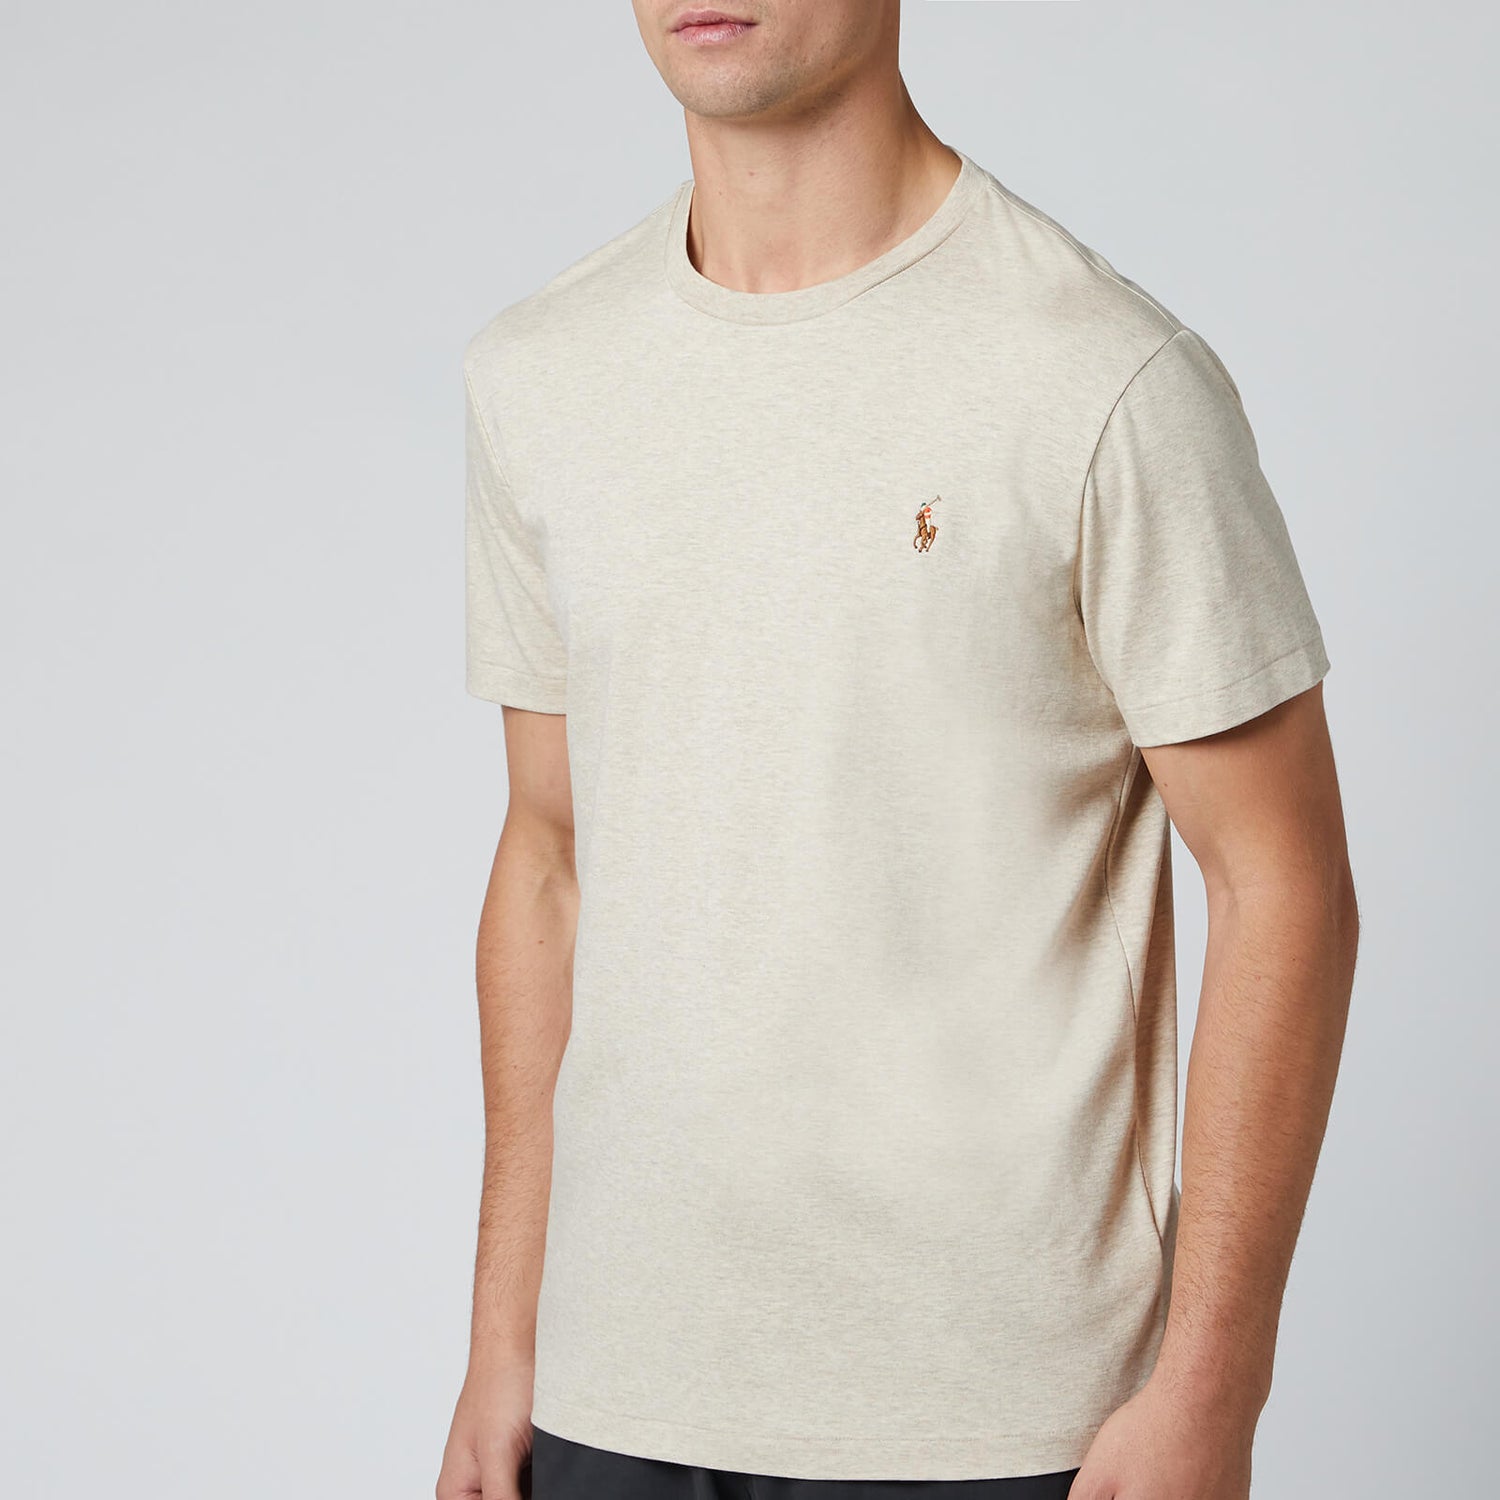 Polo Ralph Lauren Men's Custom Slim Fit T-Shirt - Expedition Dune Heather - S